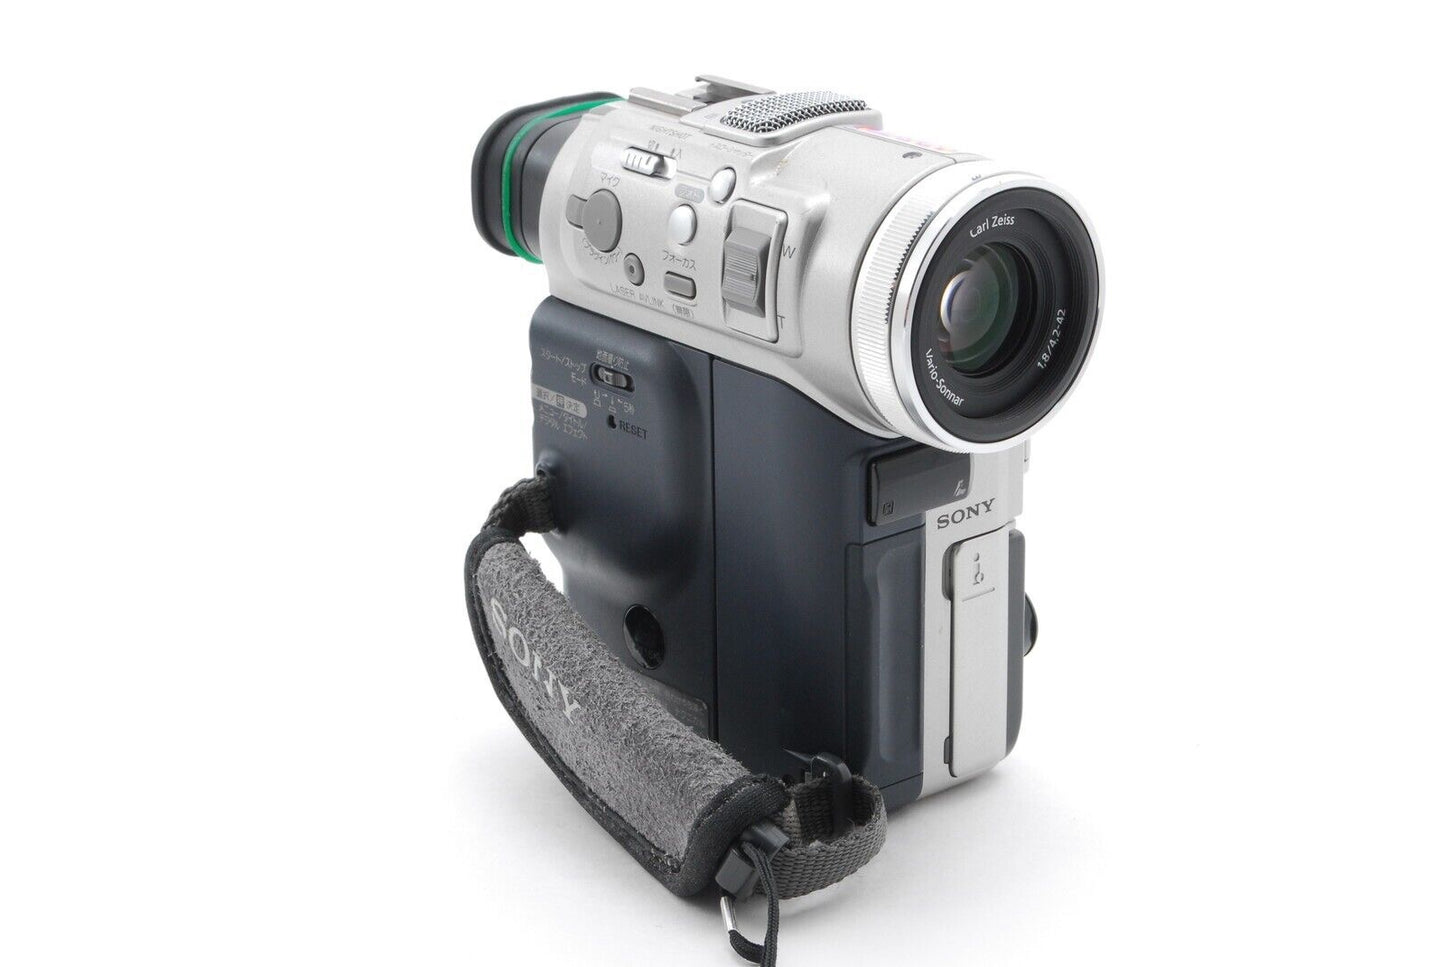 Sony Handycam DCR-PC100 Mini DV Camcorder Carl Zeiss Lens